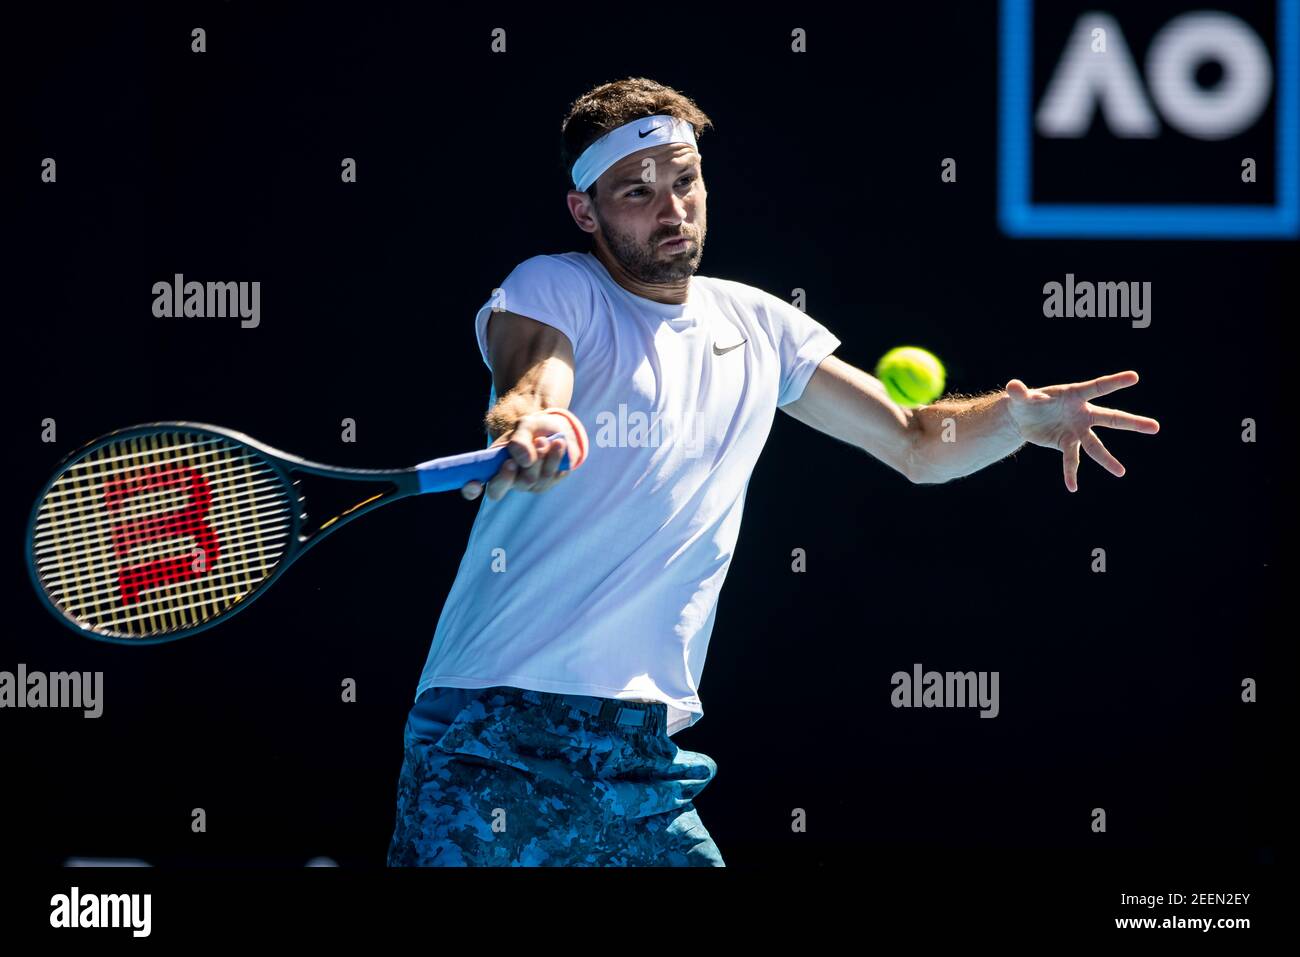 Wimbledon 2021: Kei Nishikori, Grigor Dimitrov sent packing in second round